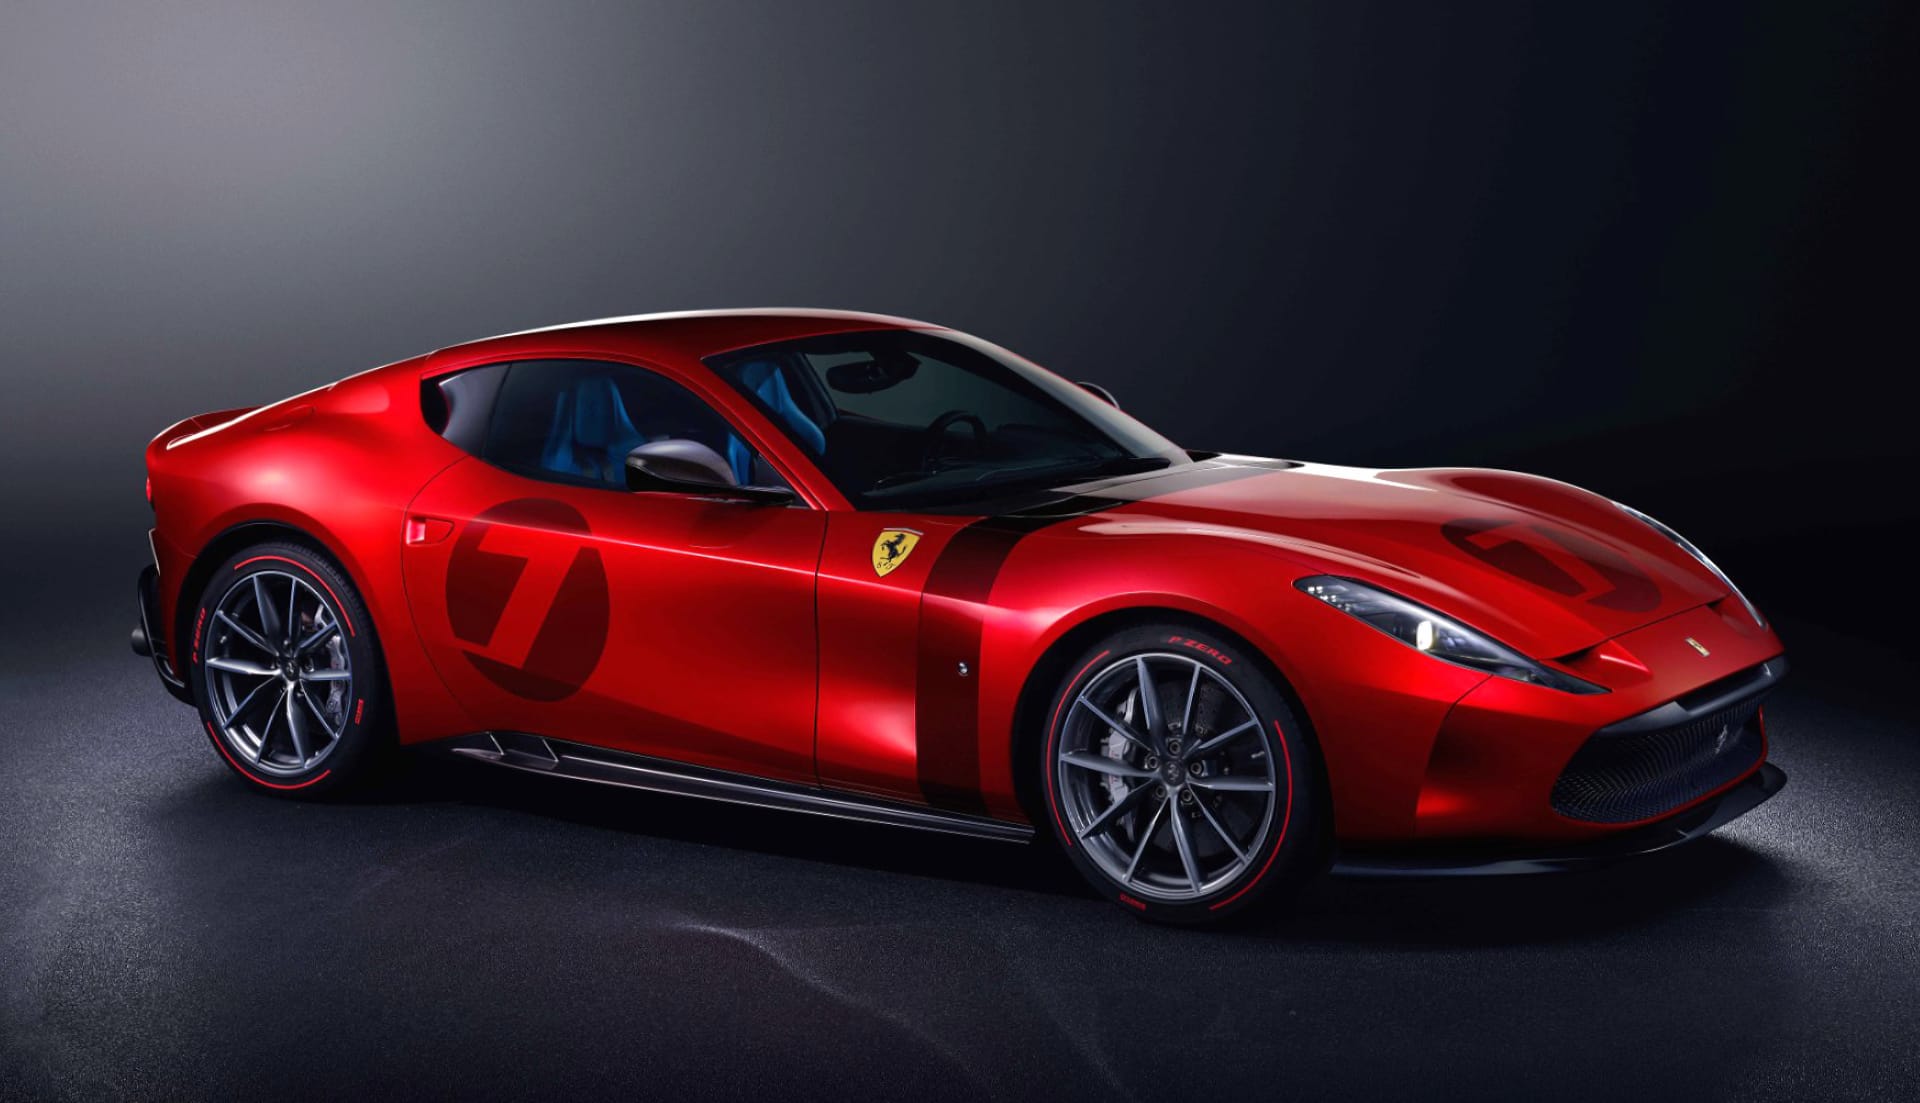 Ferrari Omologata at 750 x 1334 iPhone 6 size wallpapers HD quality